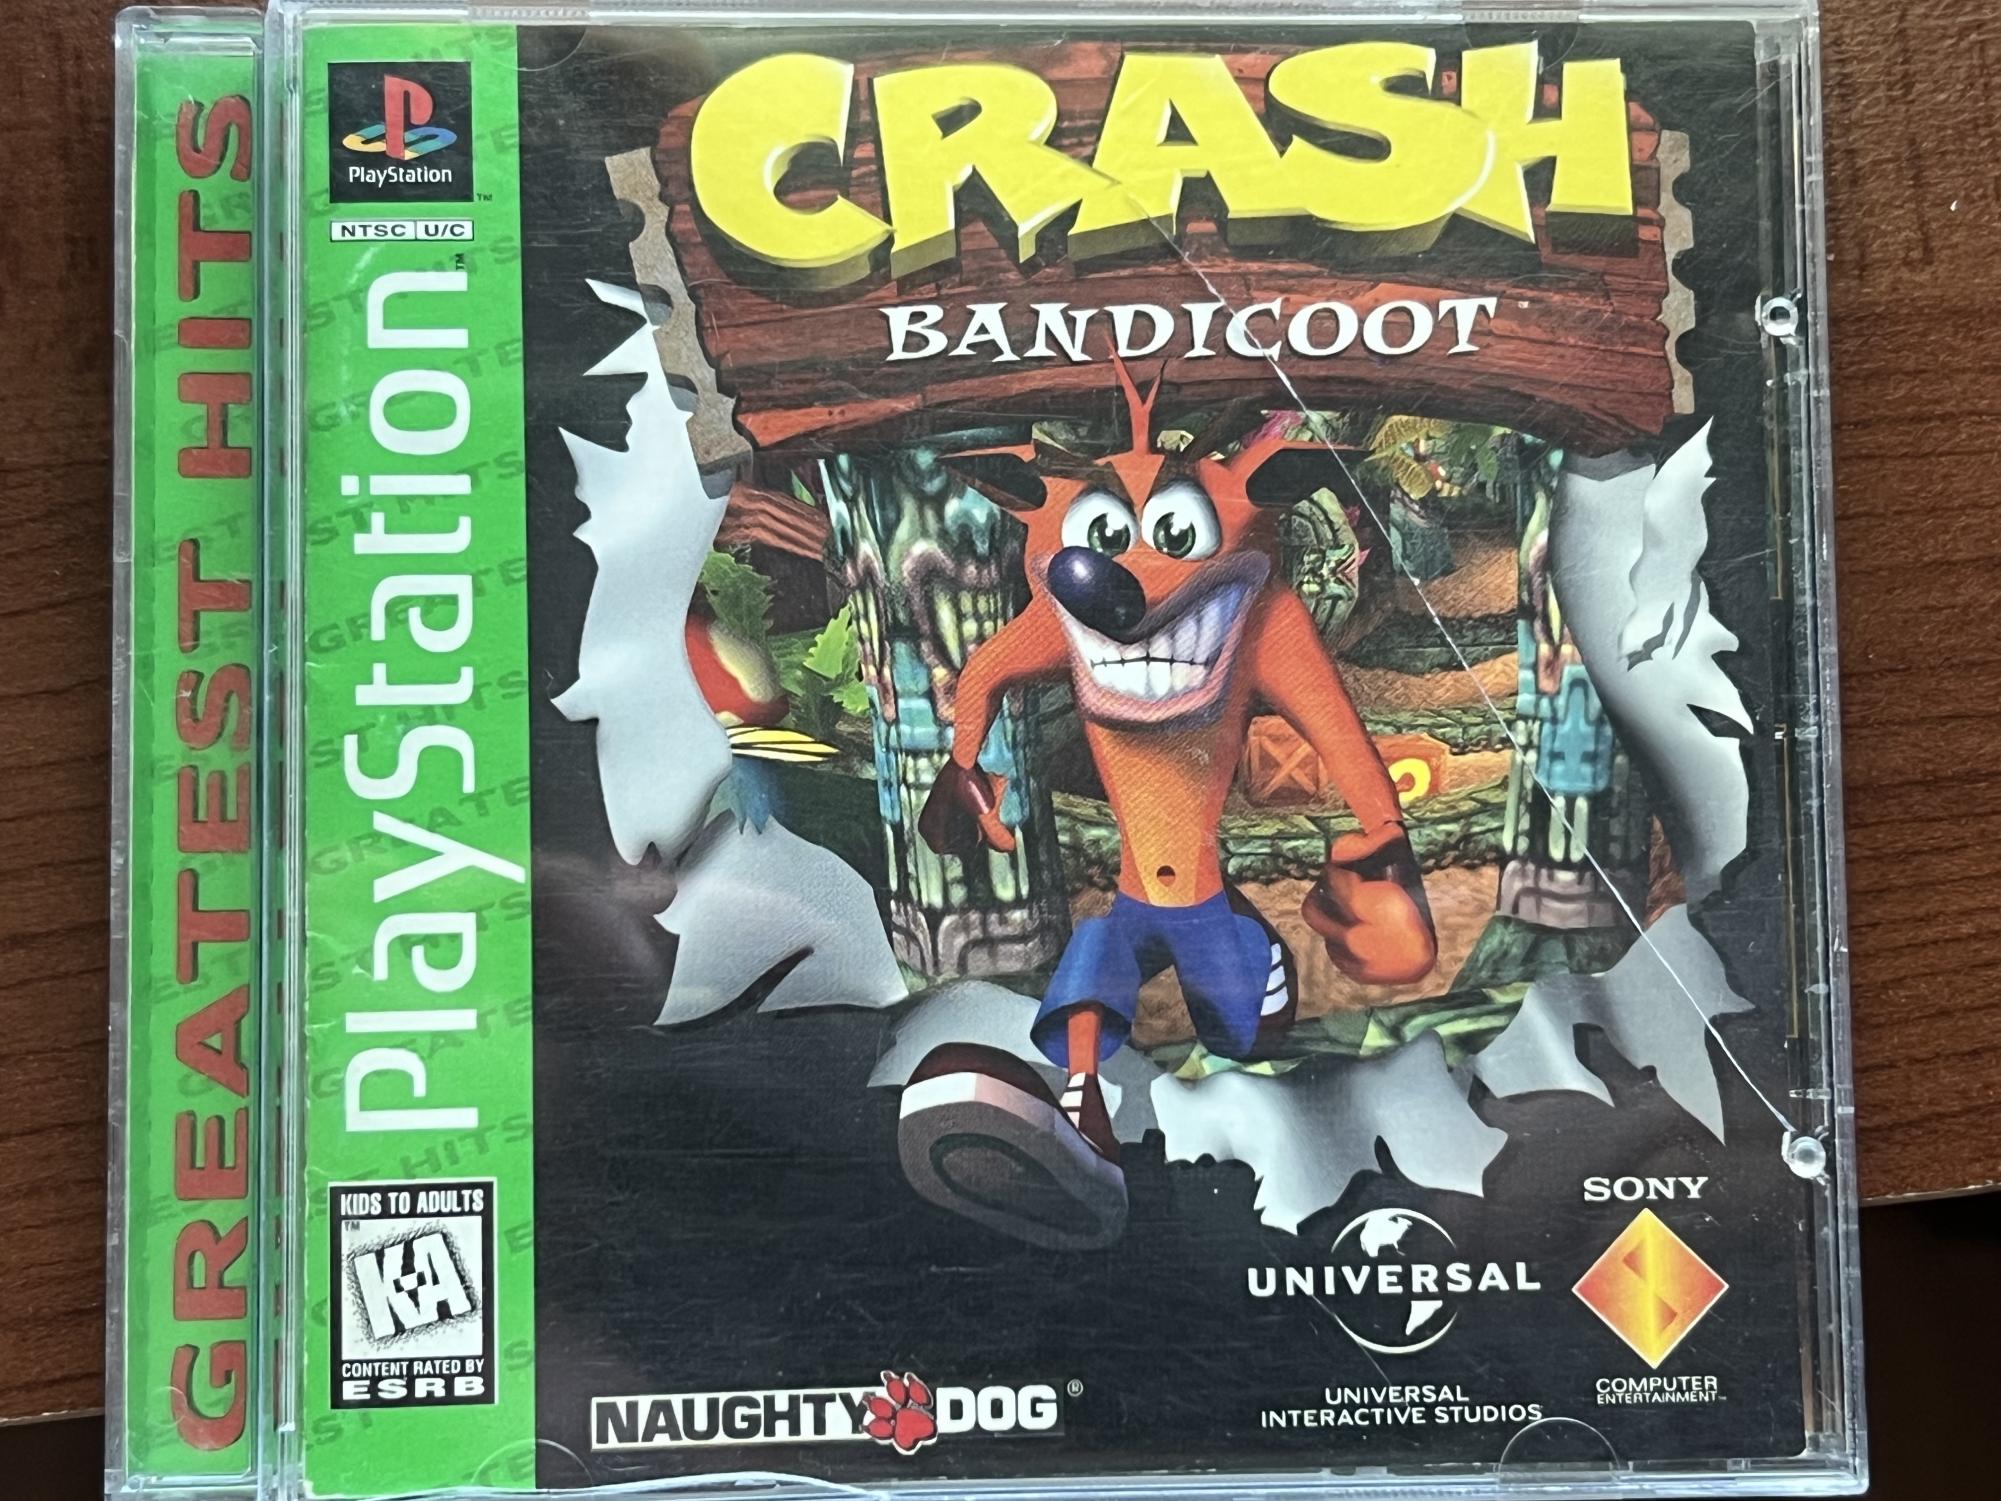 Crash Bandicoot: On the Run closes early next year